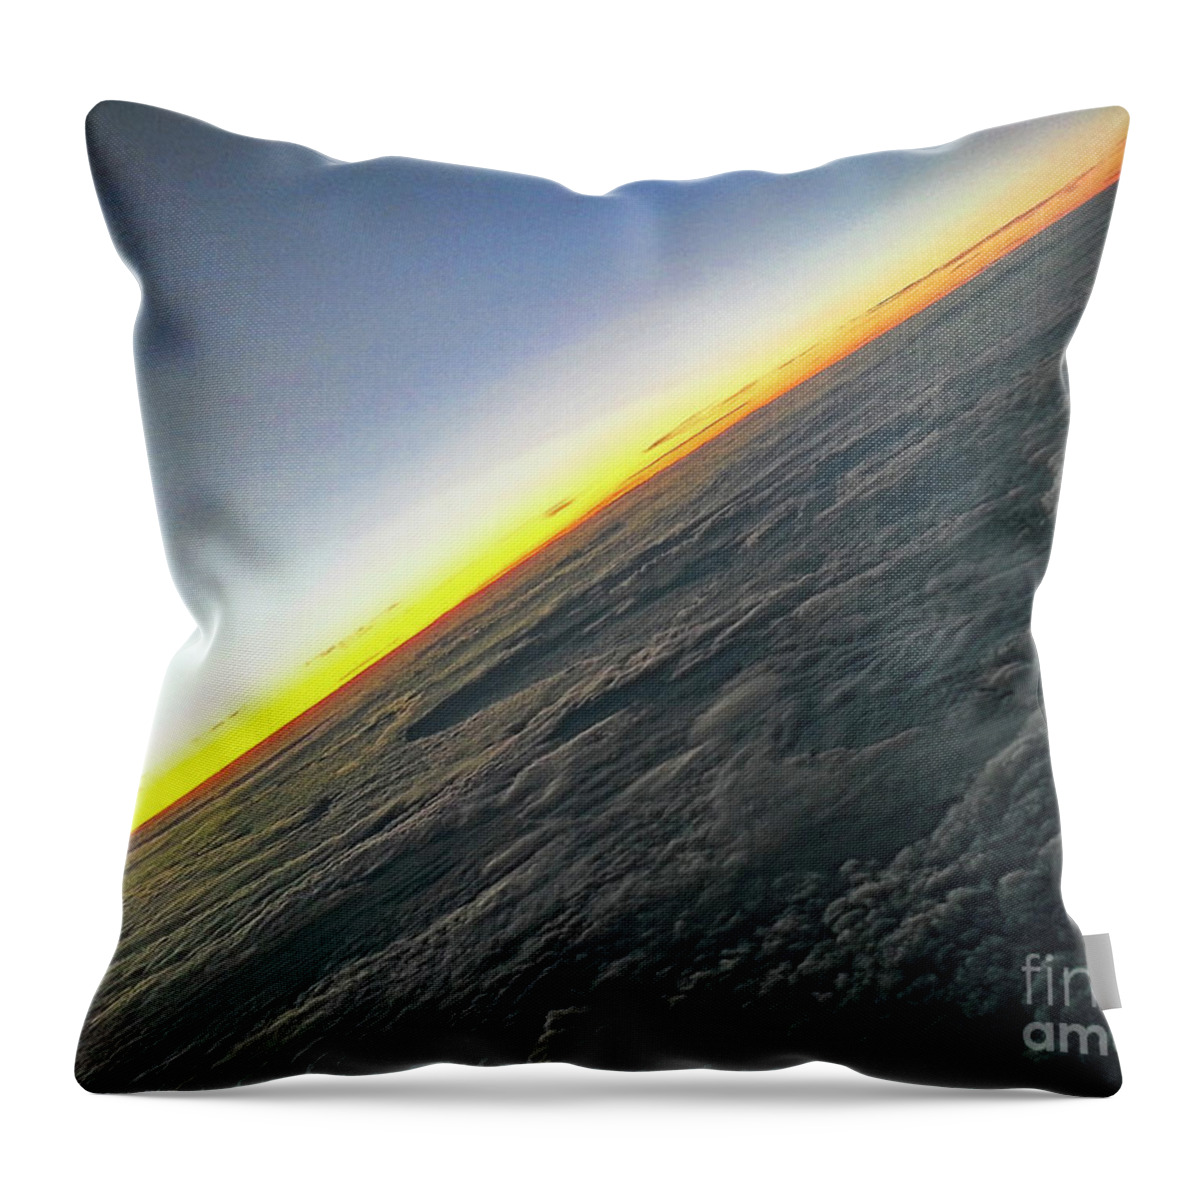 Horizon Throw Pillow featuring the photograph Tilt Horizon by Robert Knight